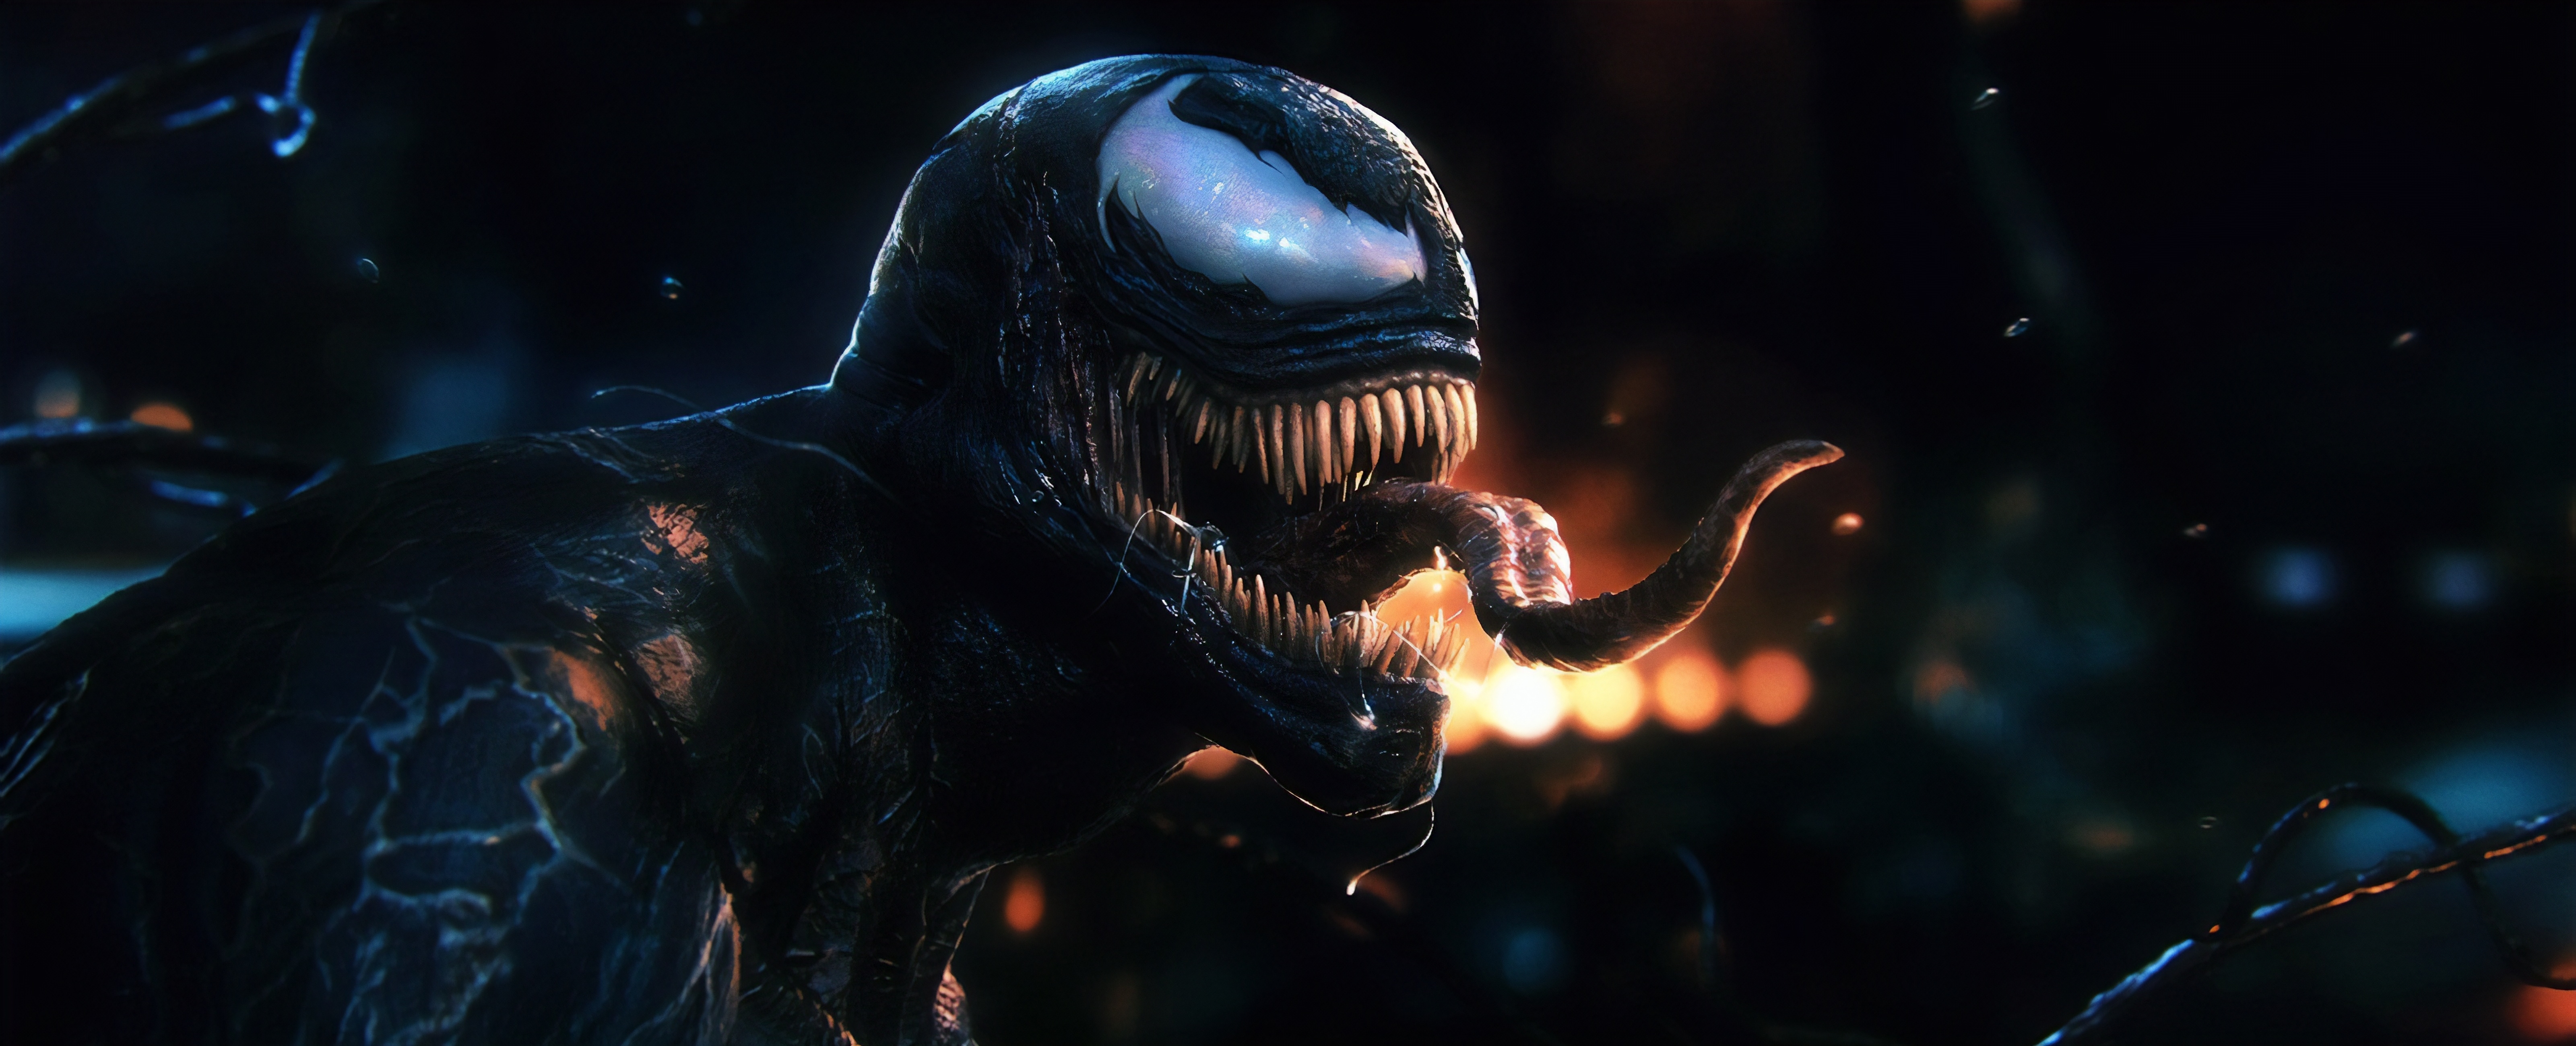  Venom  Backgrounds  Pictures Images